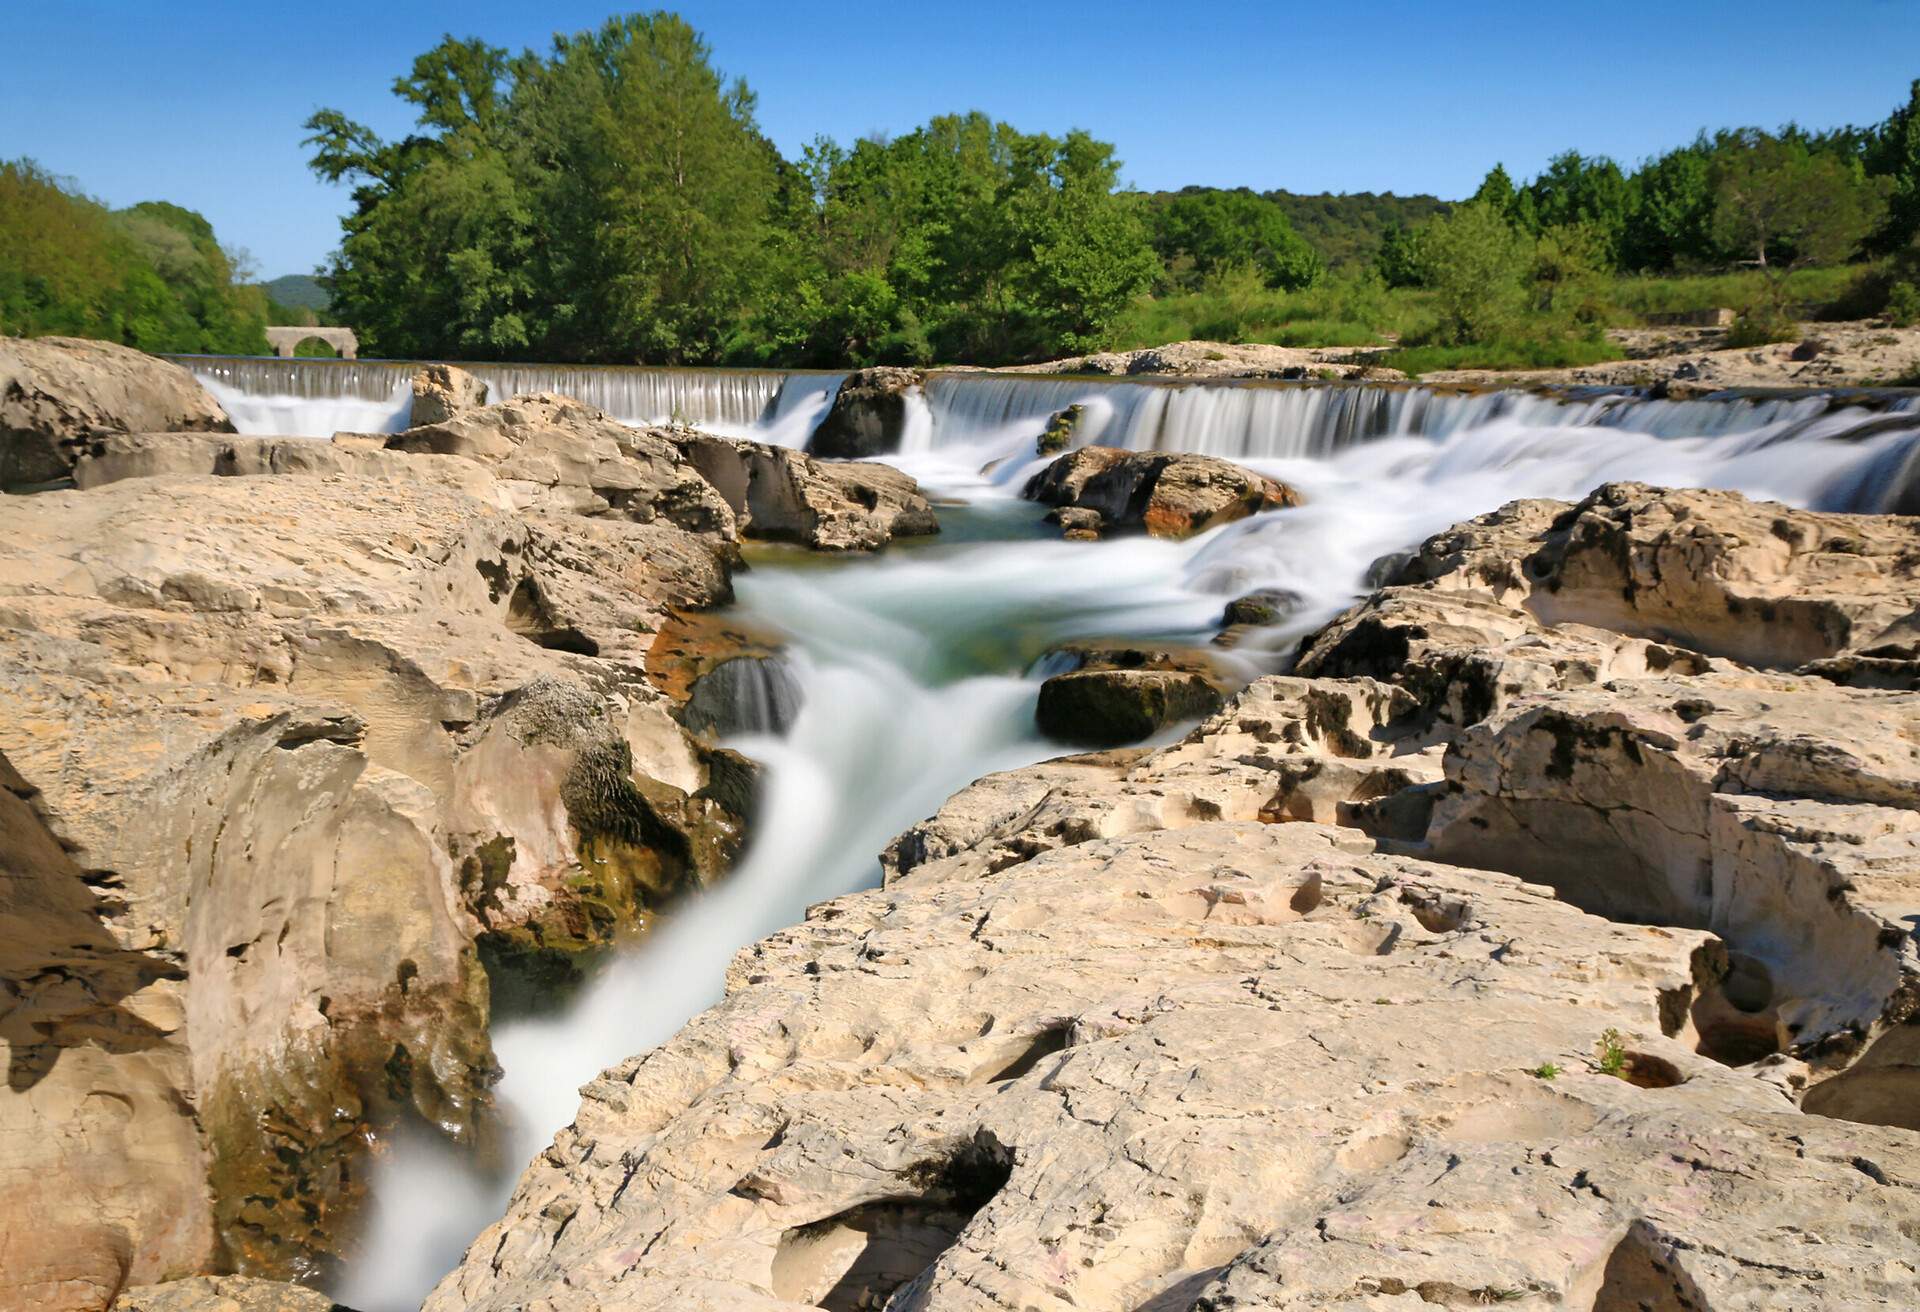 Water gushing through limestone rocks into a waterfall.